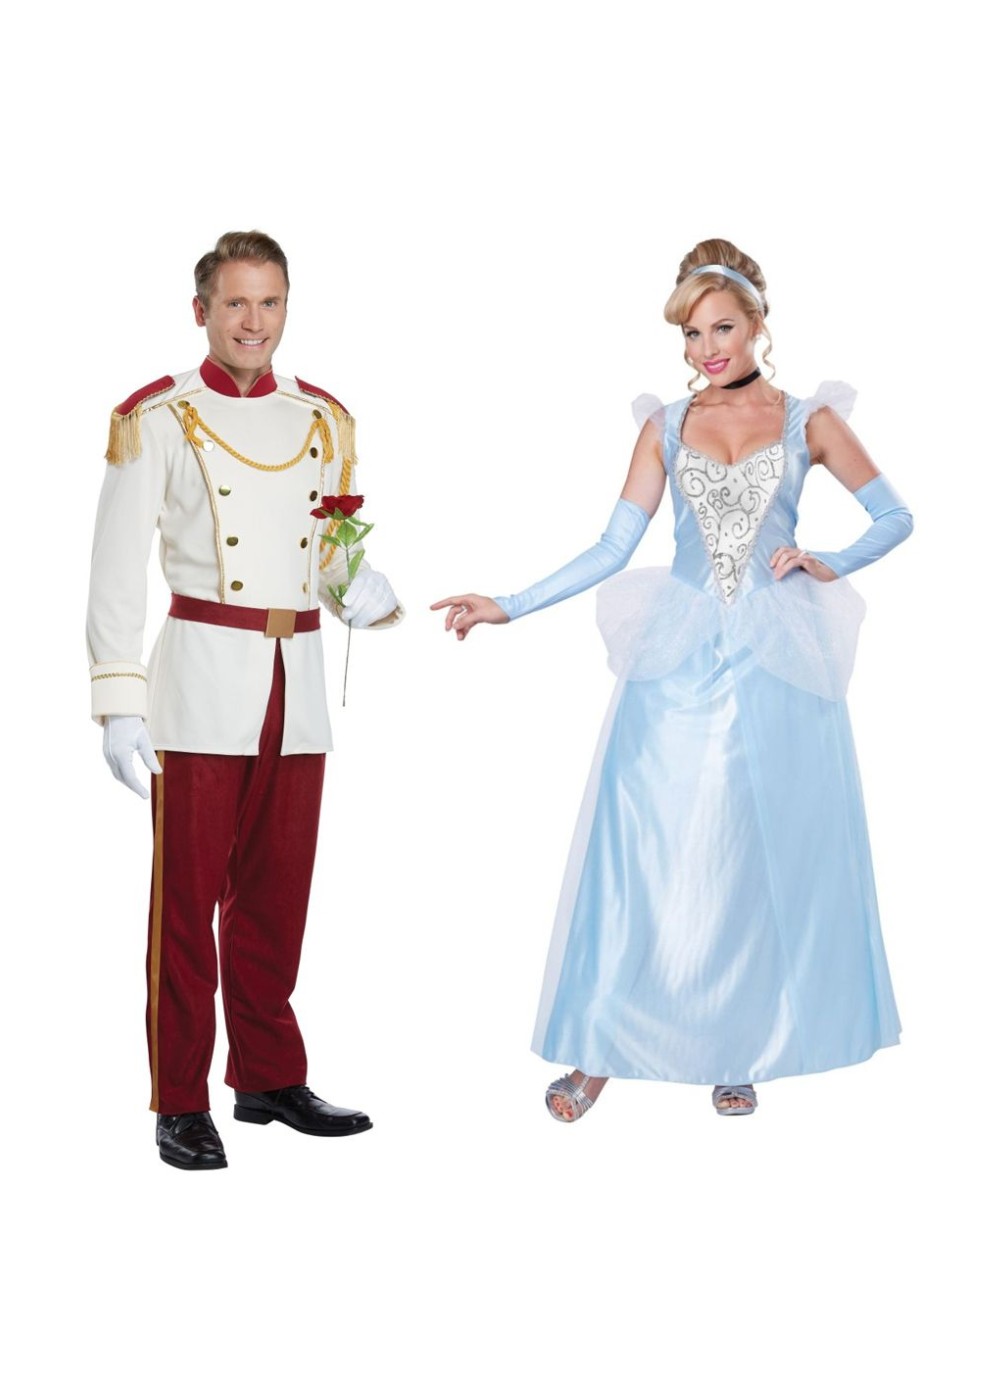 Prince Charming Men Costume And Cinderella Women Costume